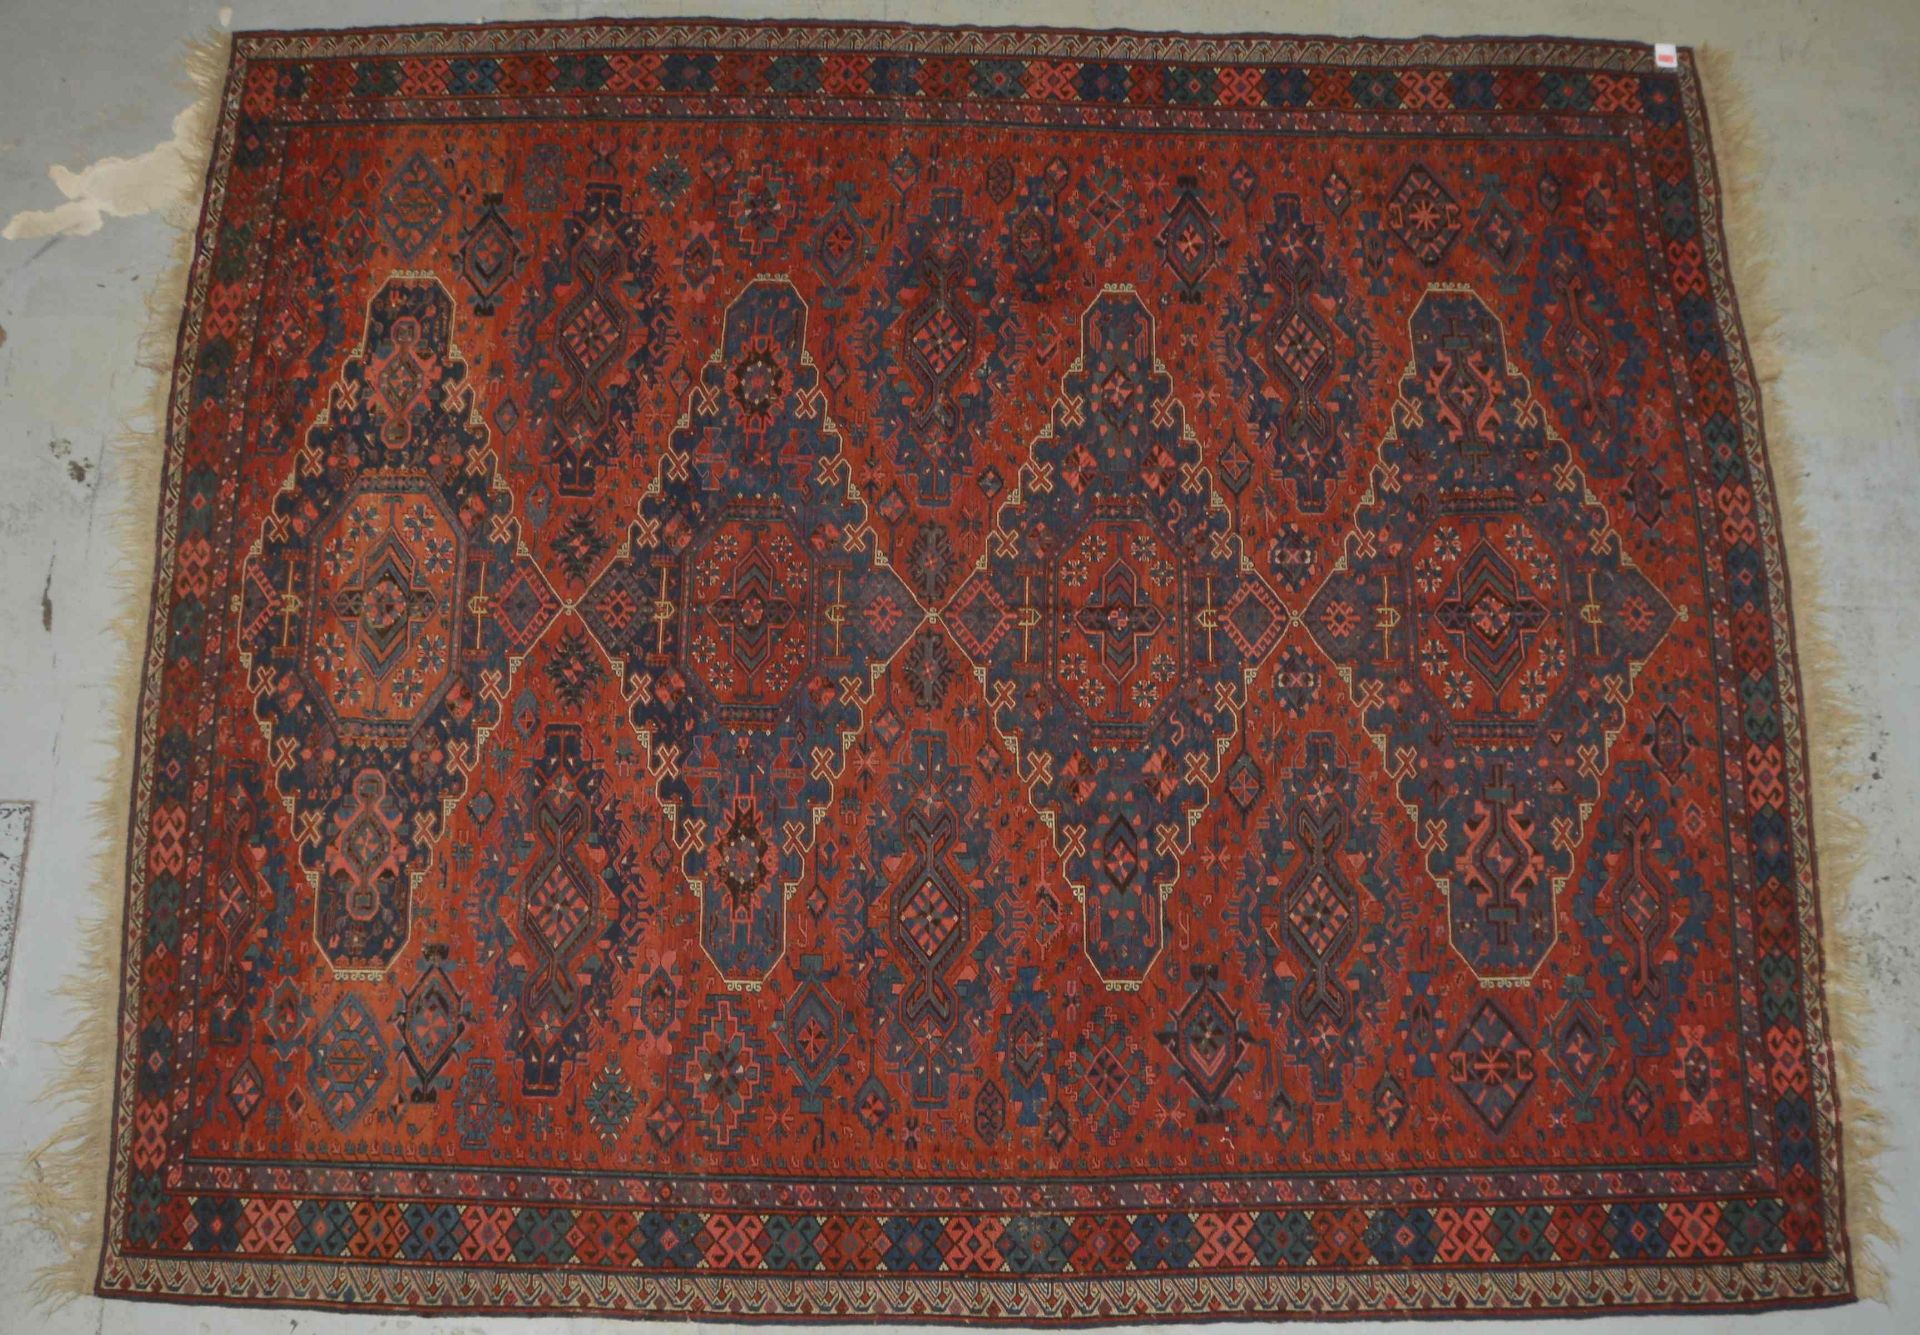 Großer Sumakh-Orientteppich (Dagestan-/Kuba-Gebiet -?, Kaukasus, um 1920), kräftige Farbgebung